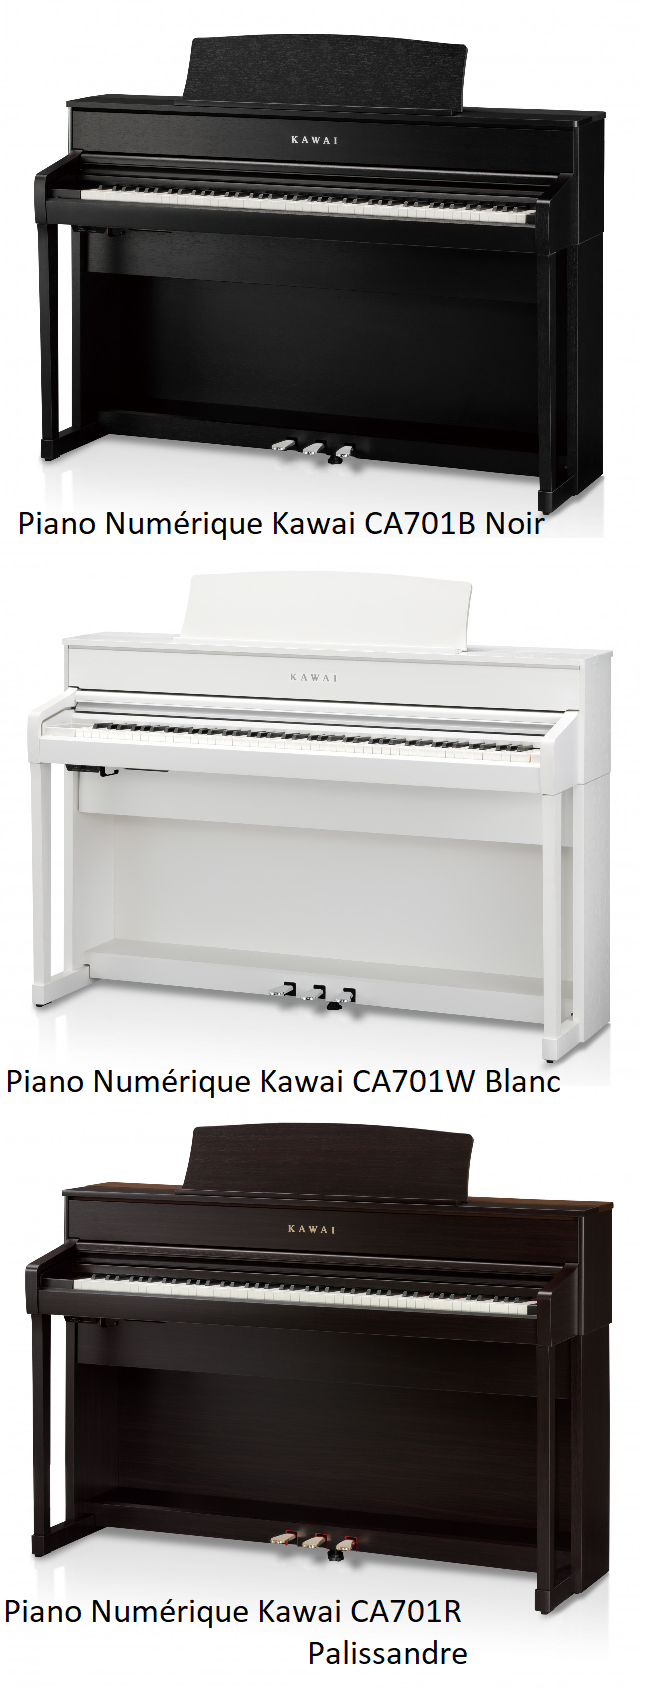 Piano Numérique Kawai CA701 - Voir en grand